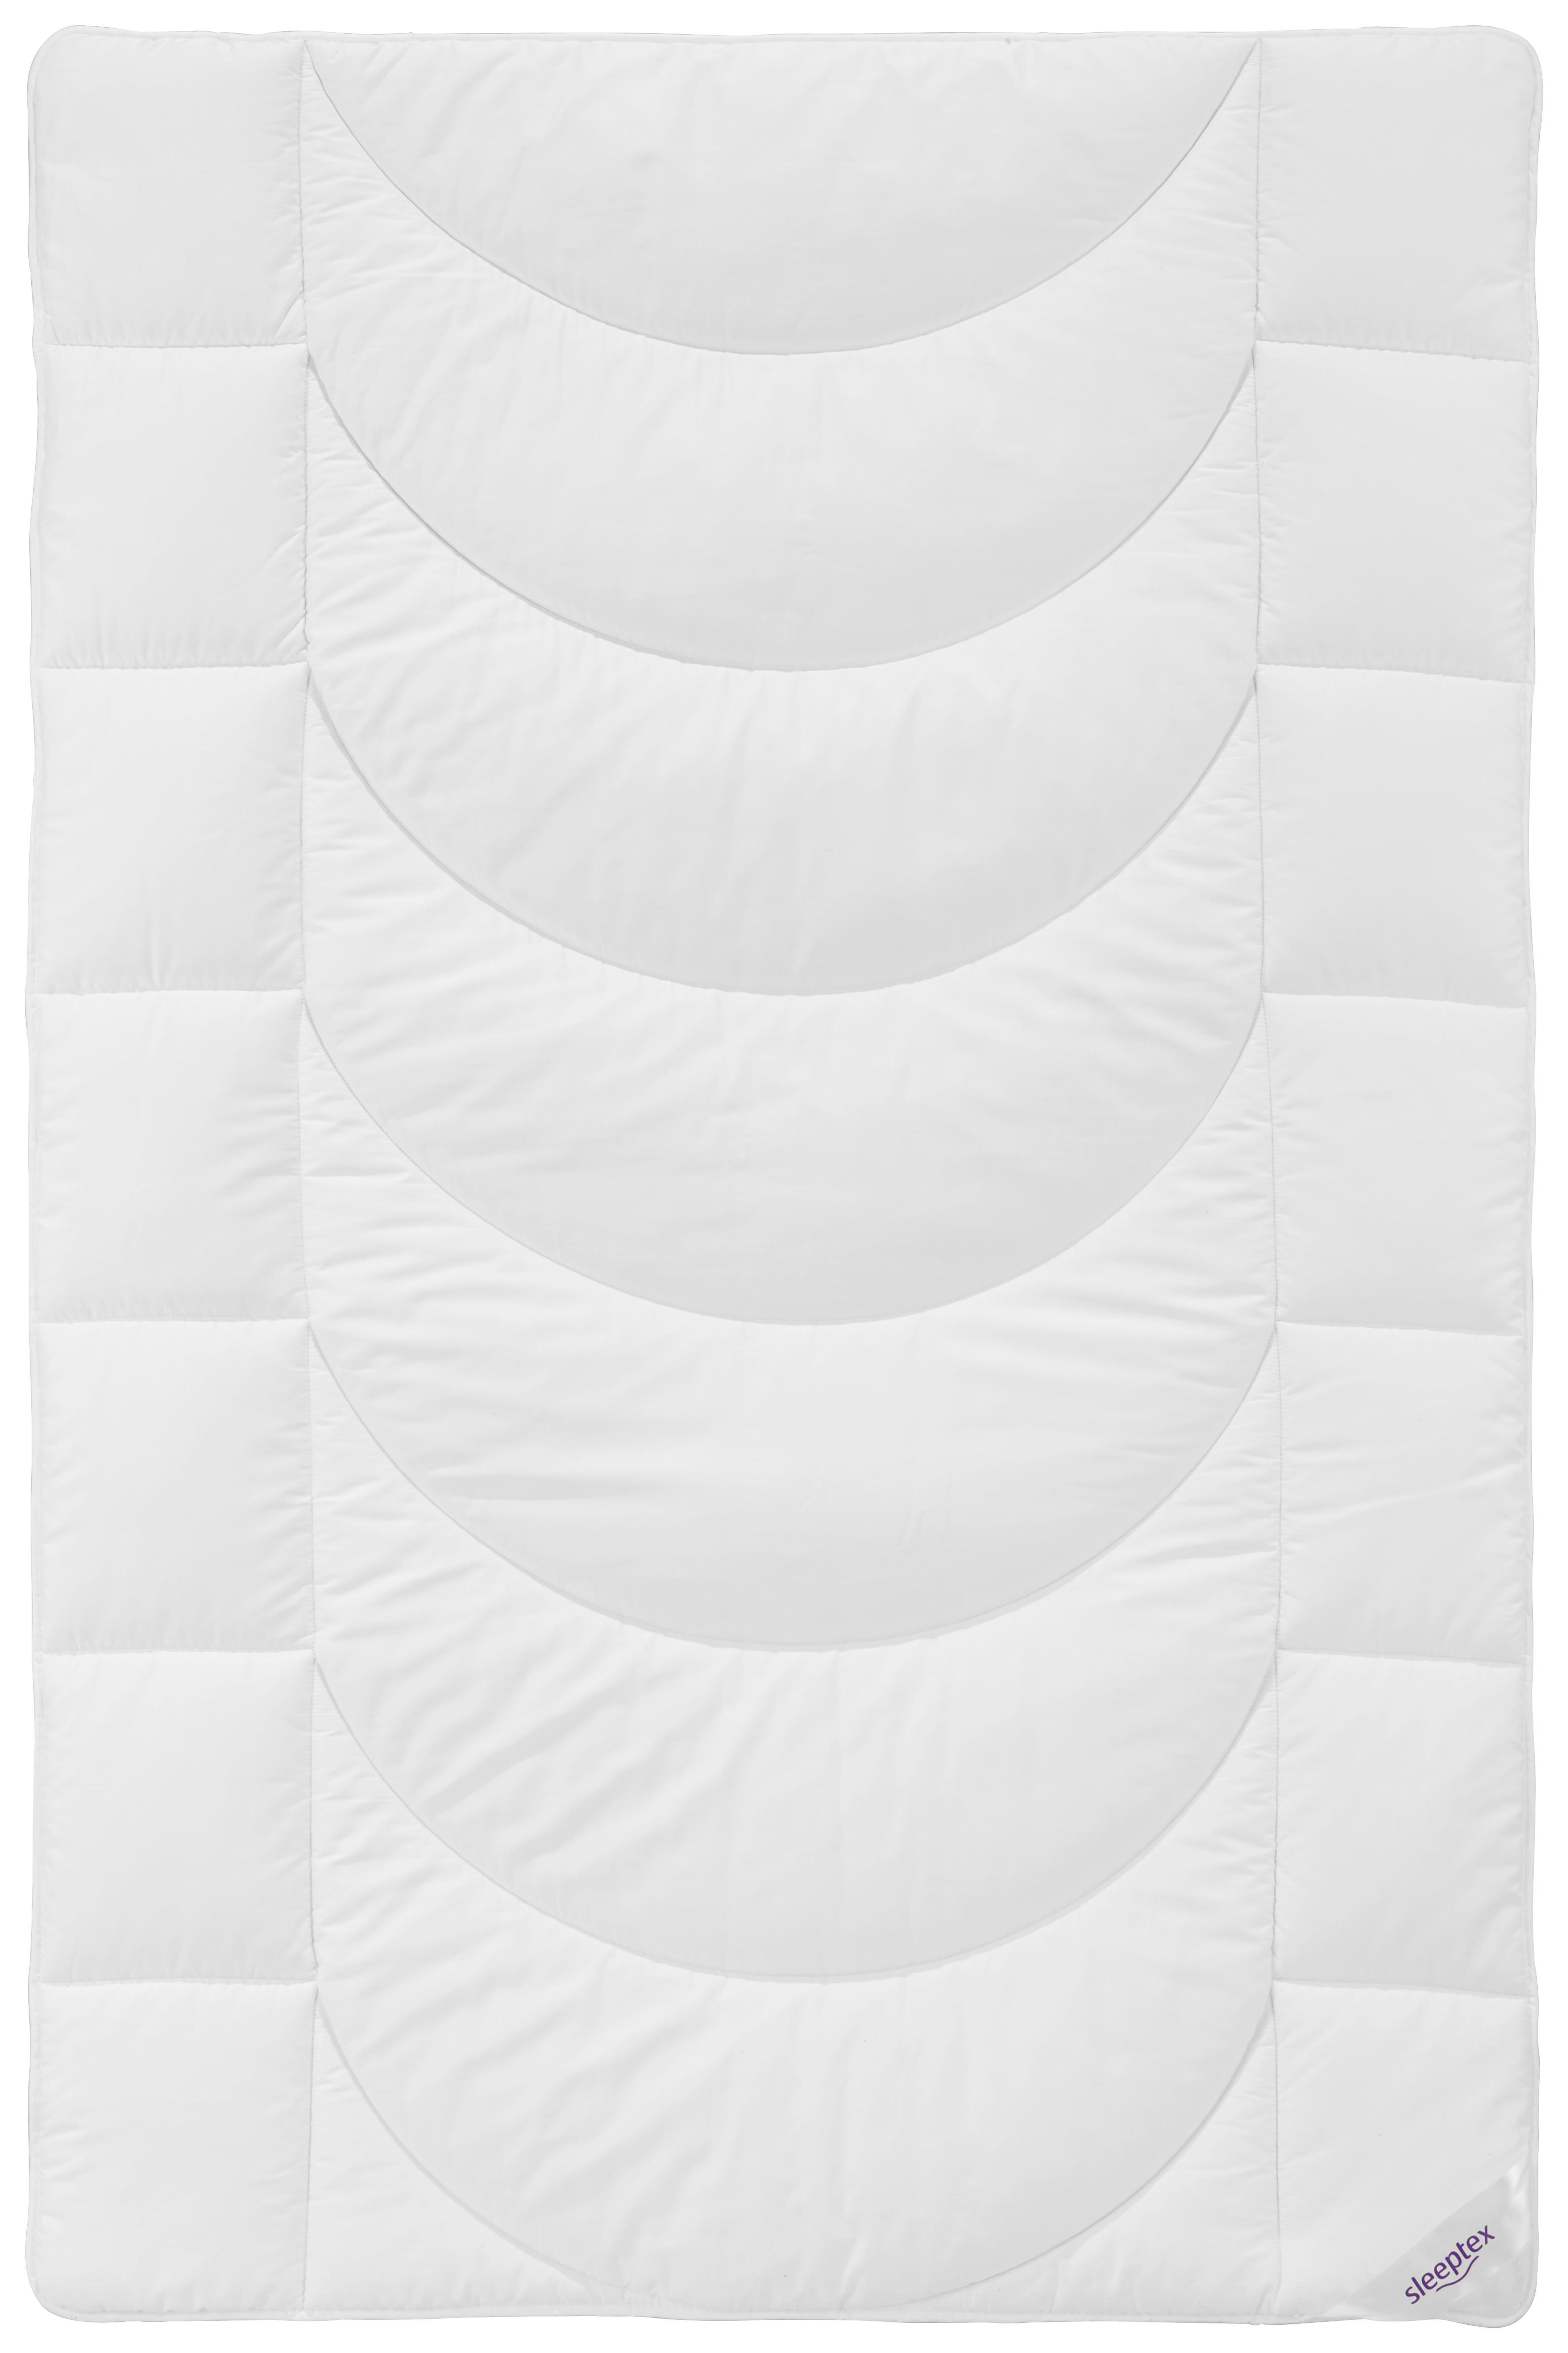 GANZJAHRESDECKE 140/200 cm  - Weiß, Basics, Textil (140/200cm) - Sleeptex